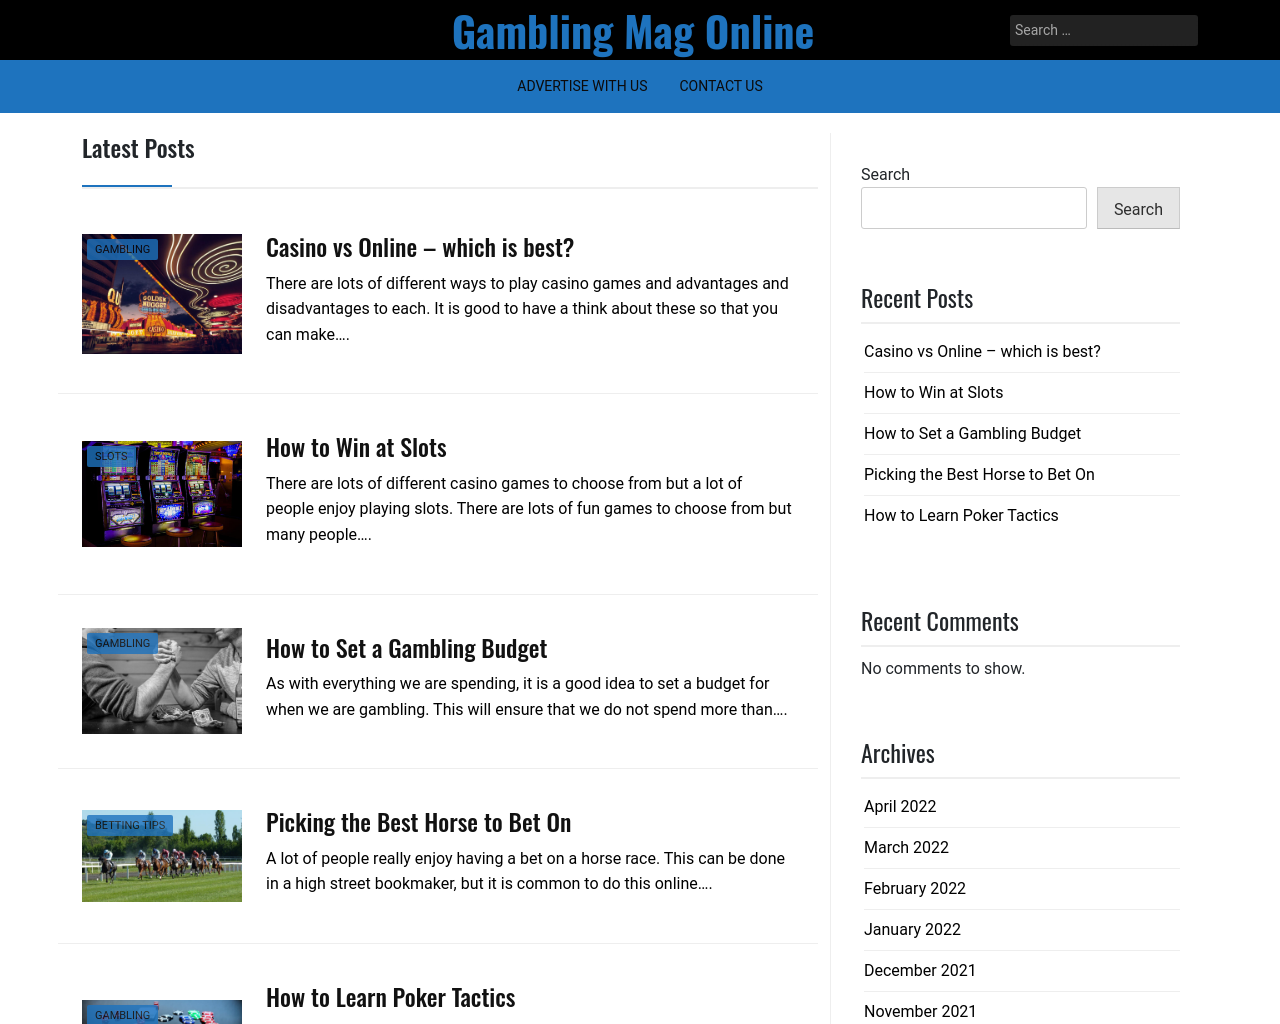 gamblingonlinemag.co.uk